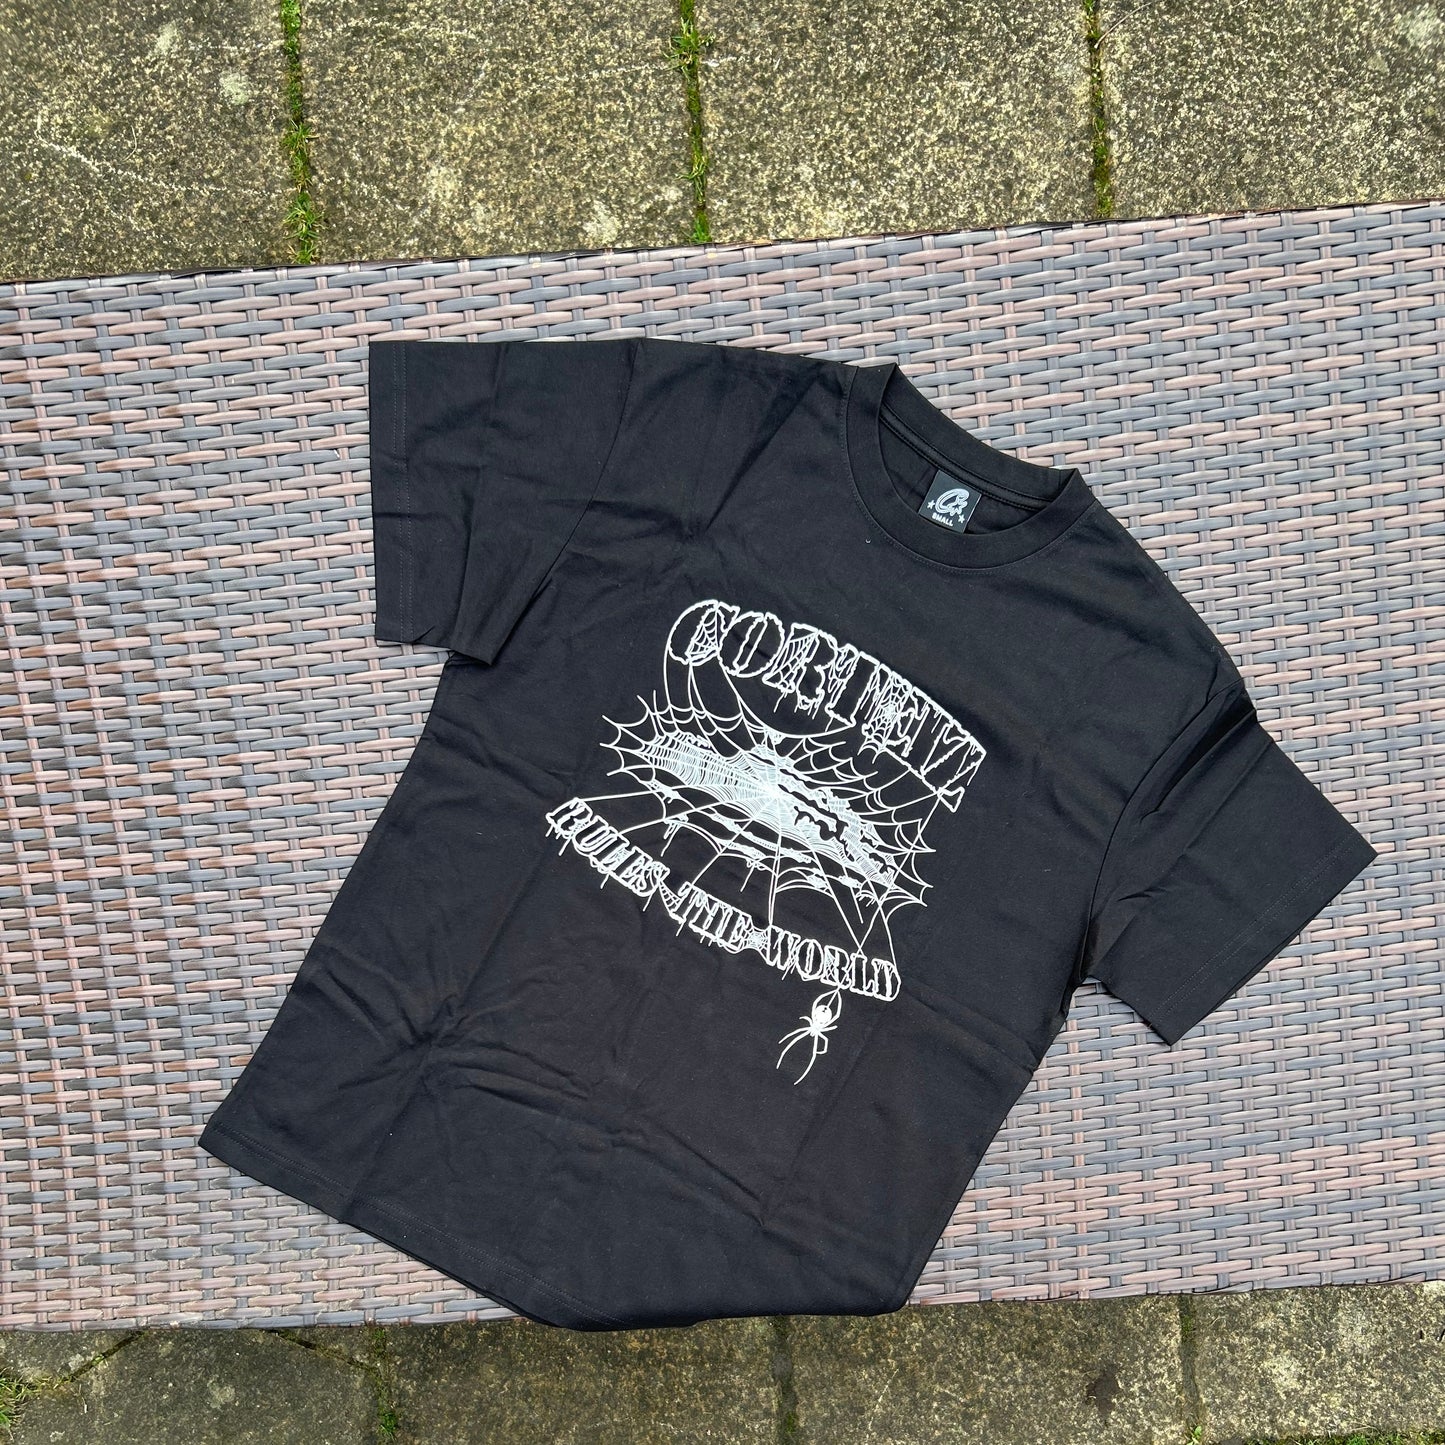 Corteiz Black Alcatraz "Web" T Shirt